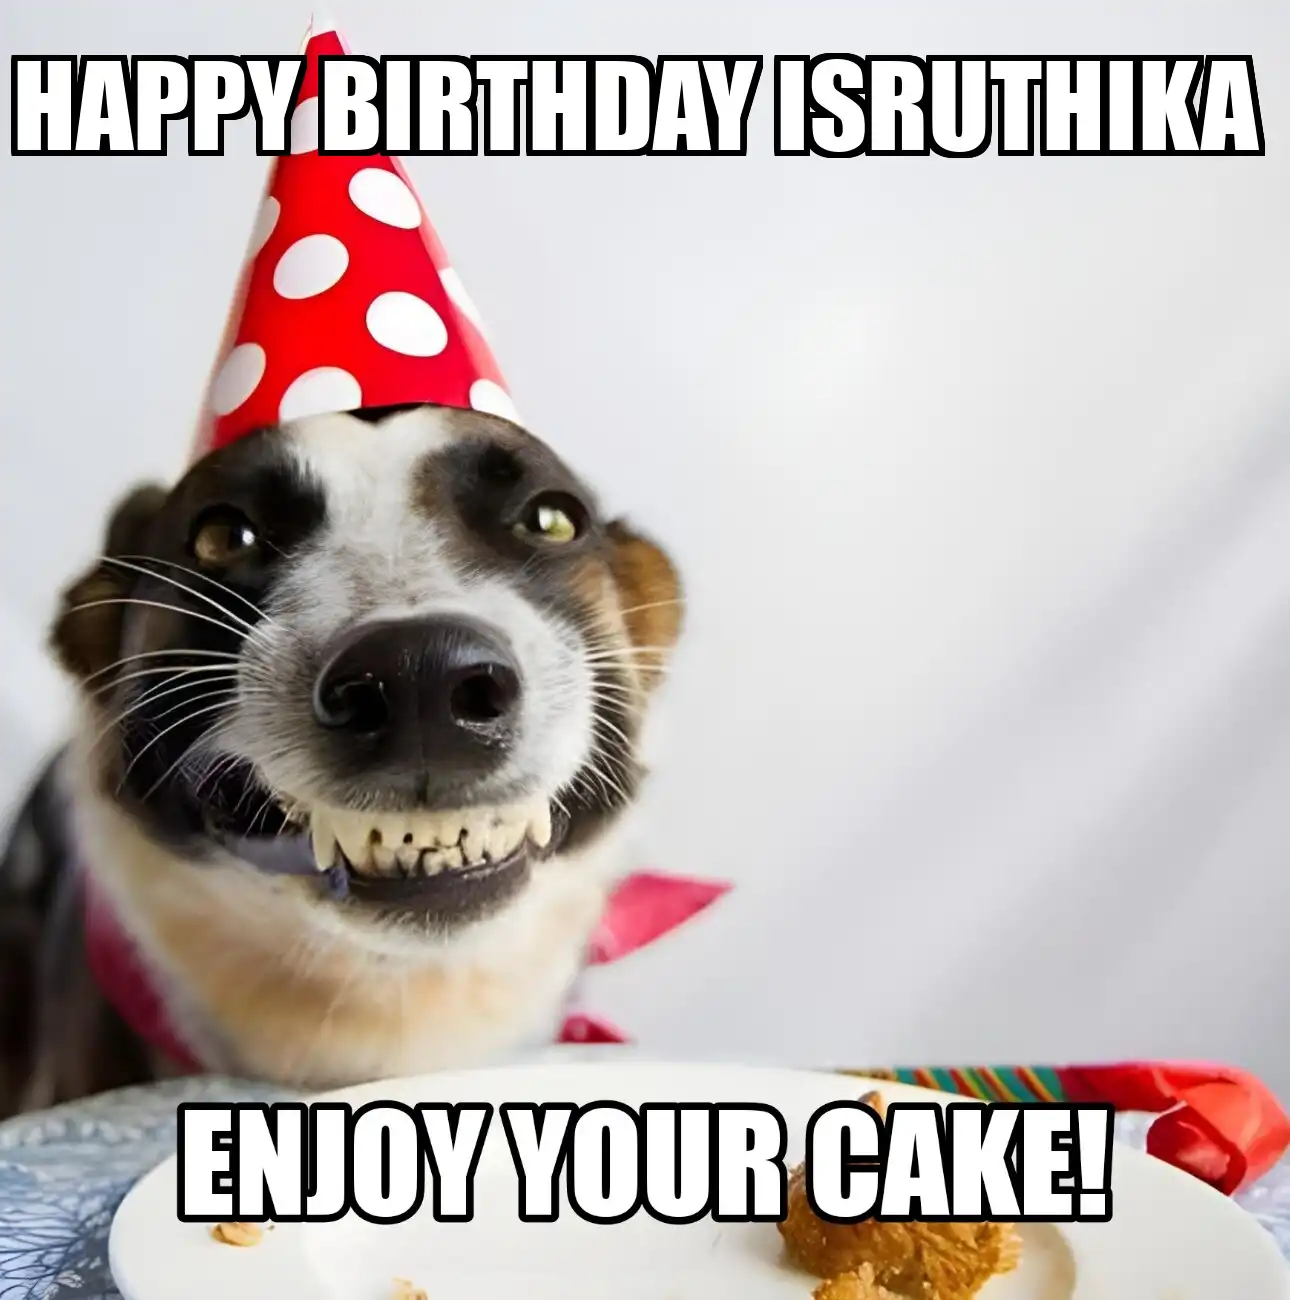 Happy Birthday Isruthika Enjoy Your Cake Dog Meme